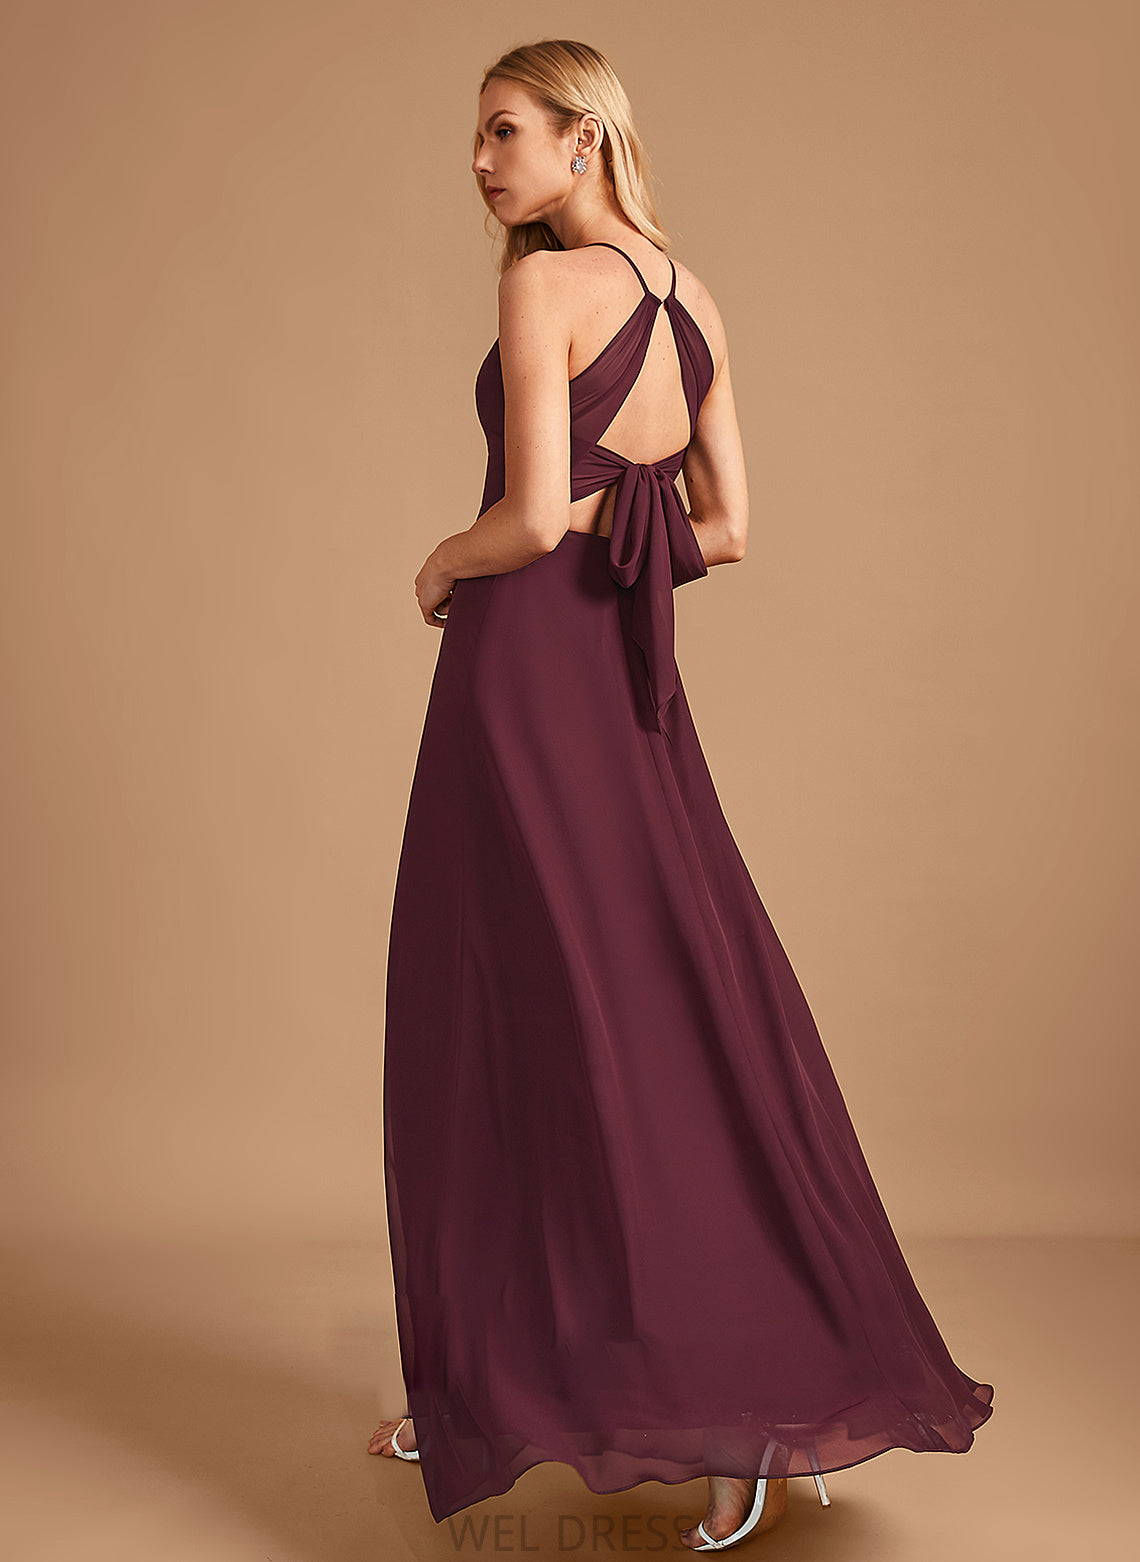 Fabric Silhouette Length Neckline Floor-Length A-Line HighNeck SplitFront Embellishment Briana Natural Waist Sleeveless